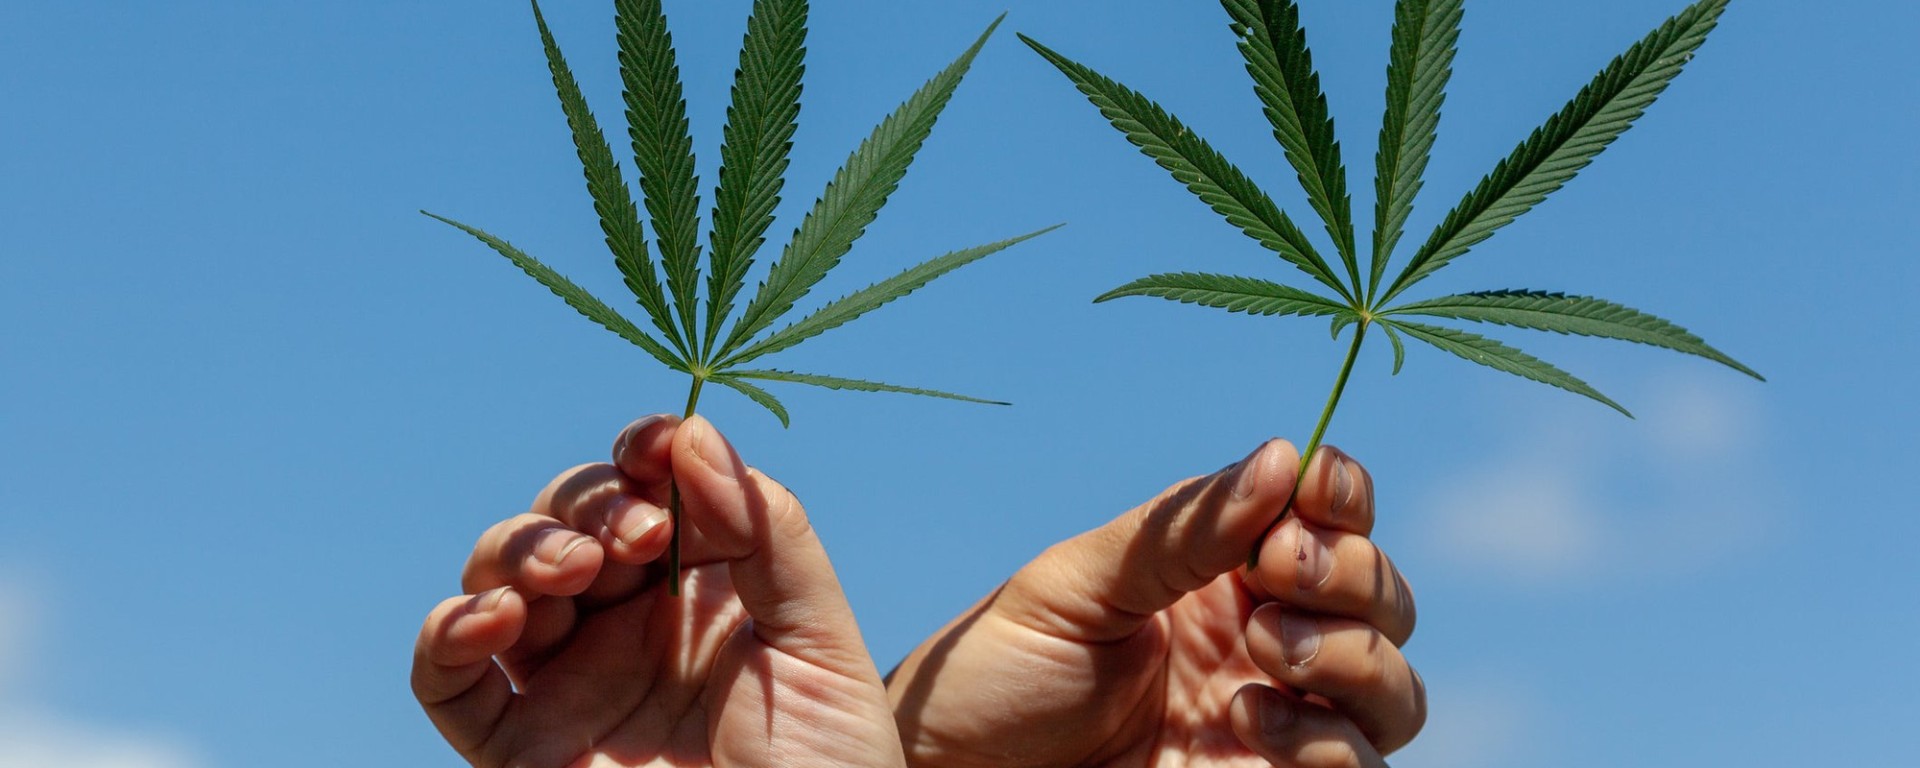 HeyHelloHigh Cannabis Content for Women | Image via Getty